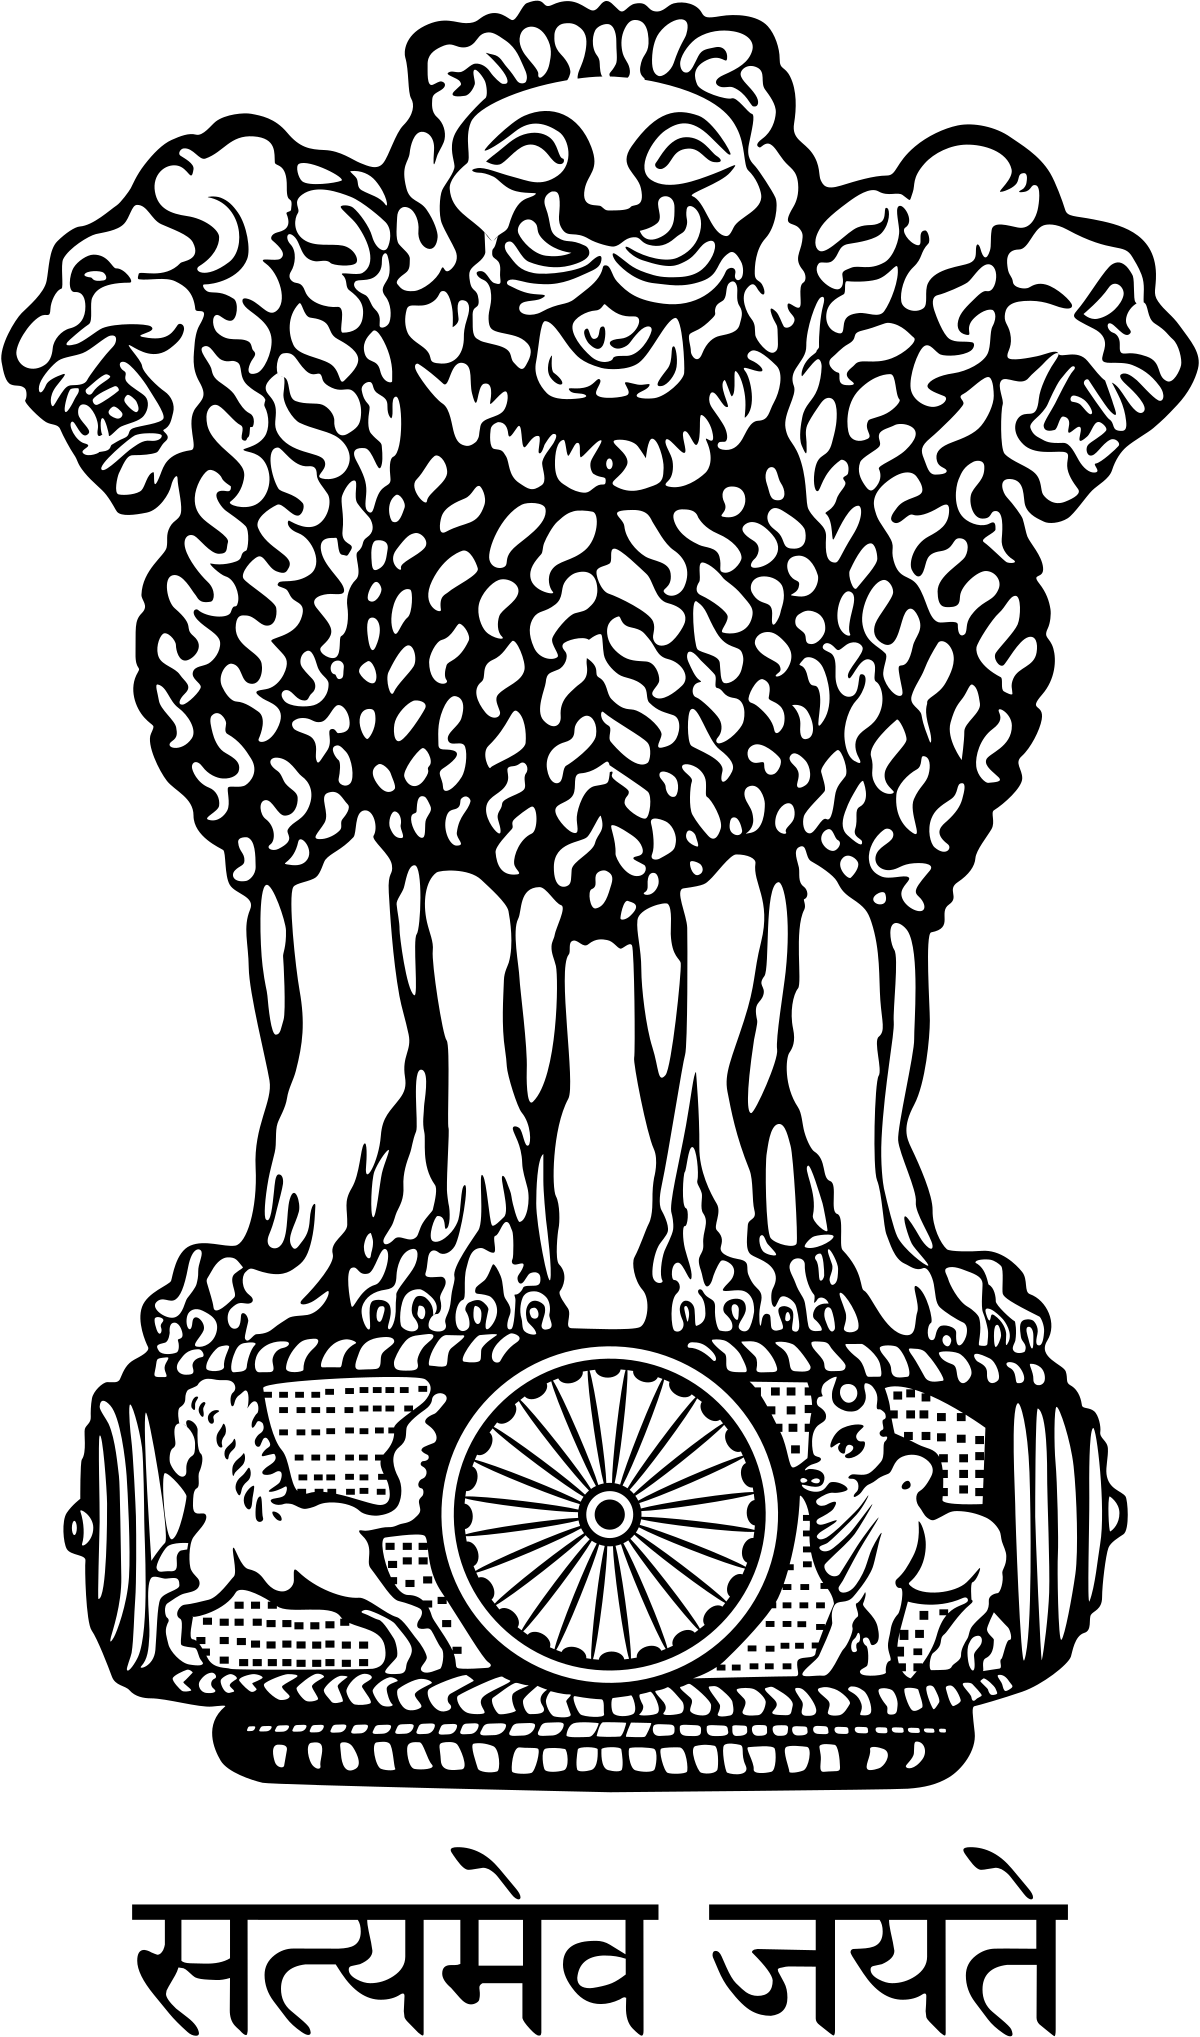 Satyameva Jayate - National Emblem